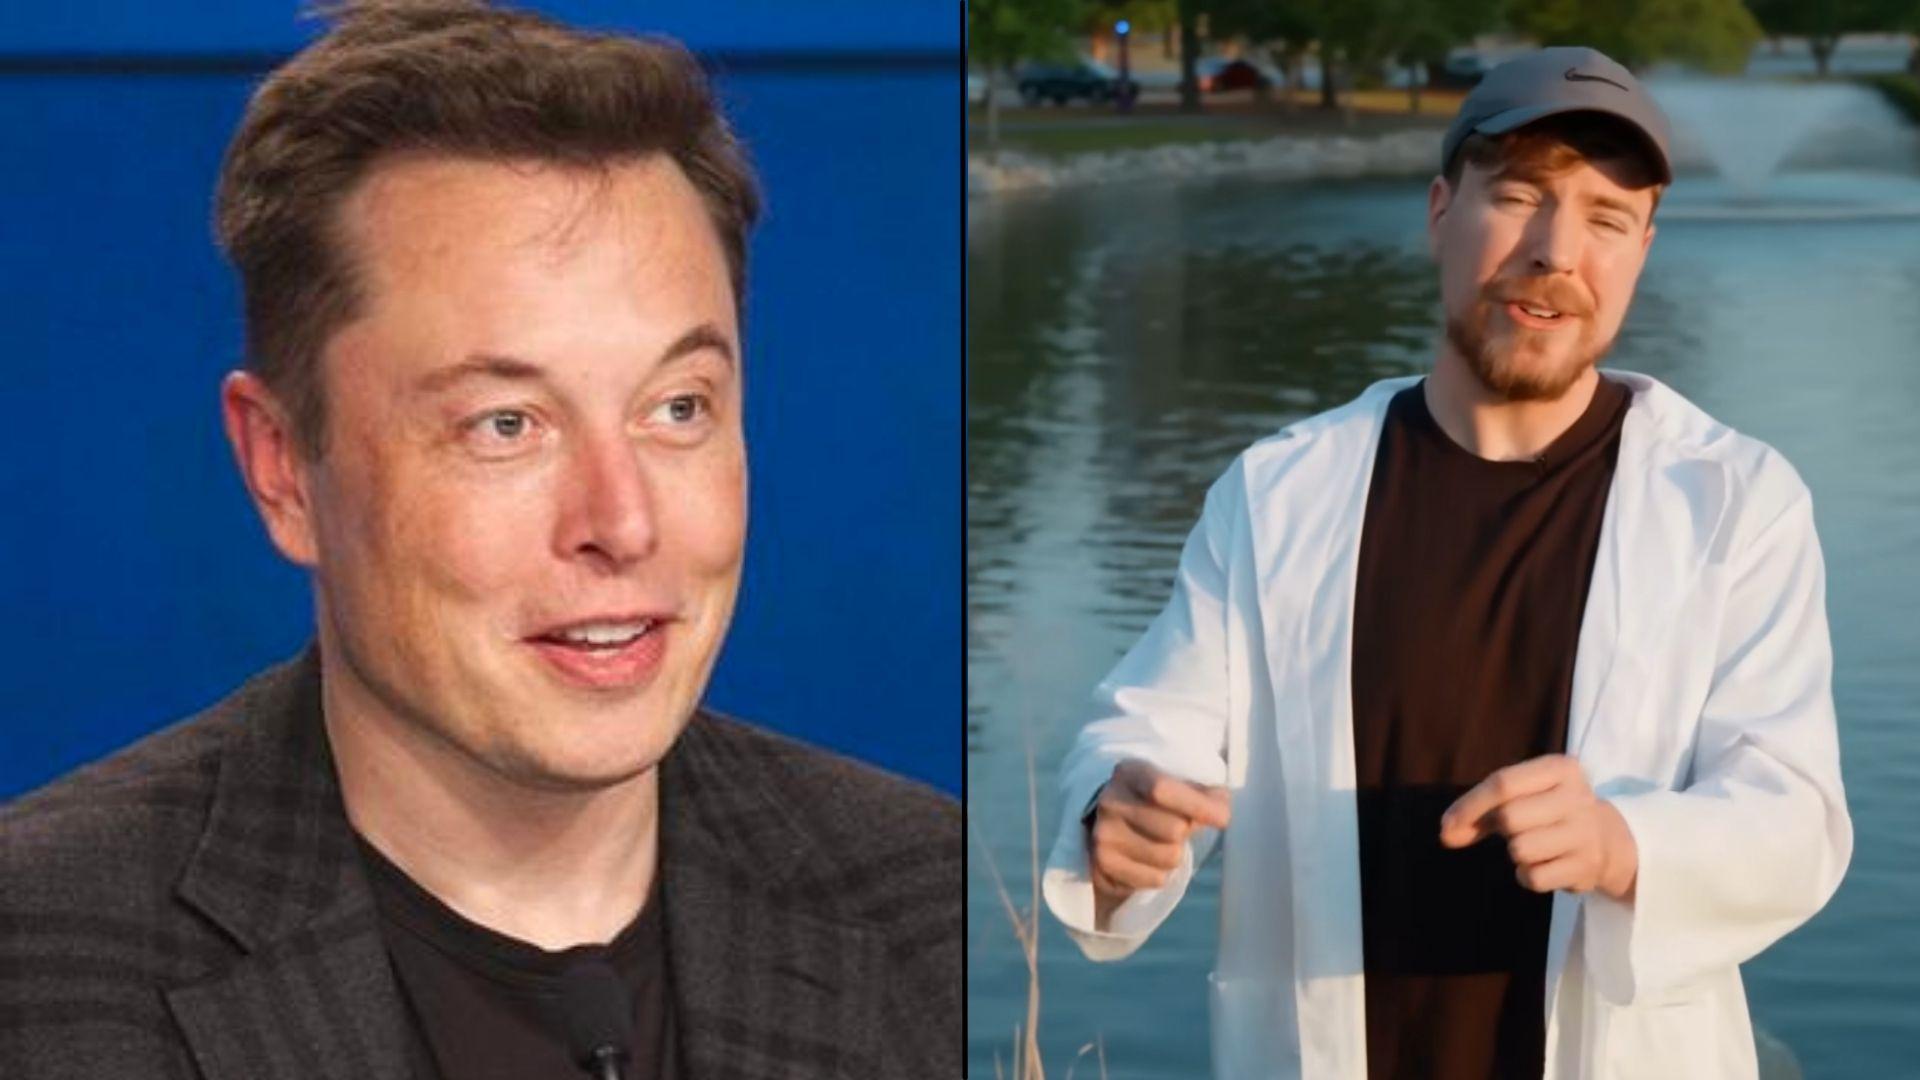 Elon Musk and MrBeast side-by-side